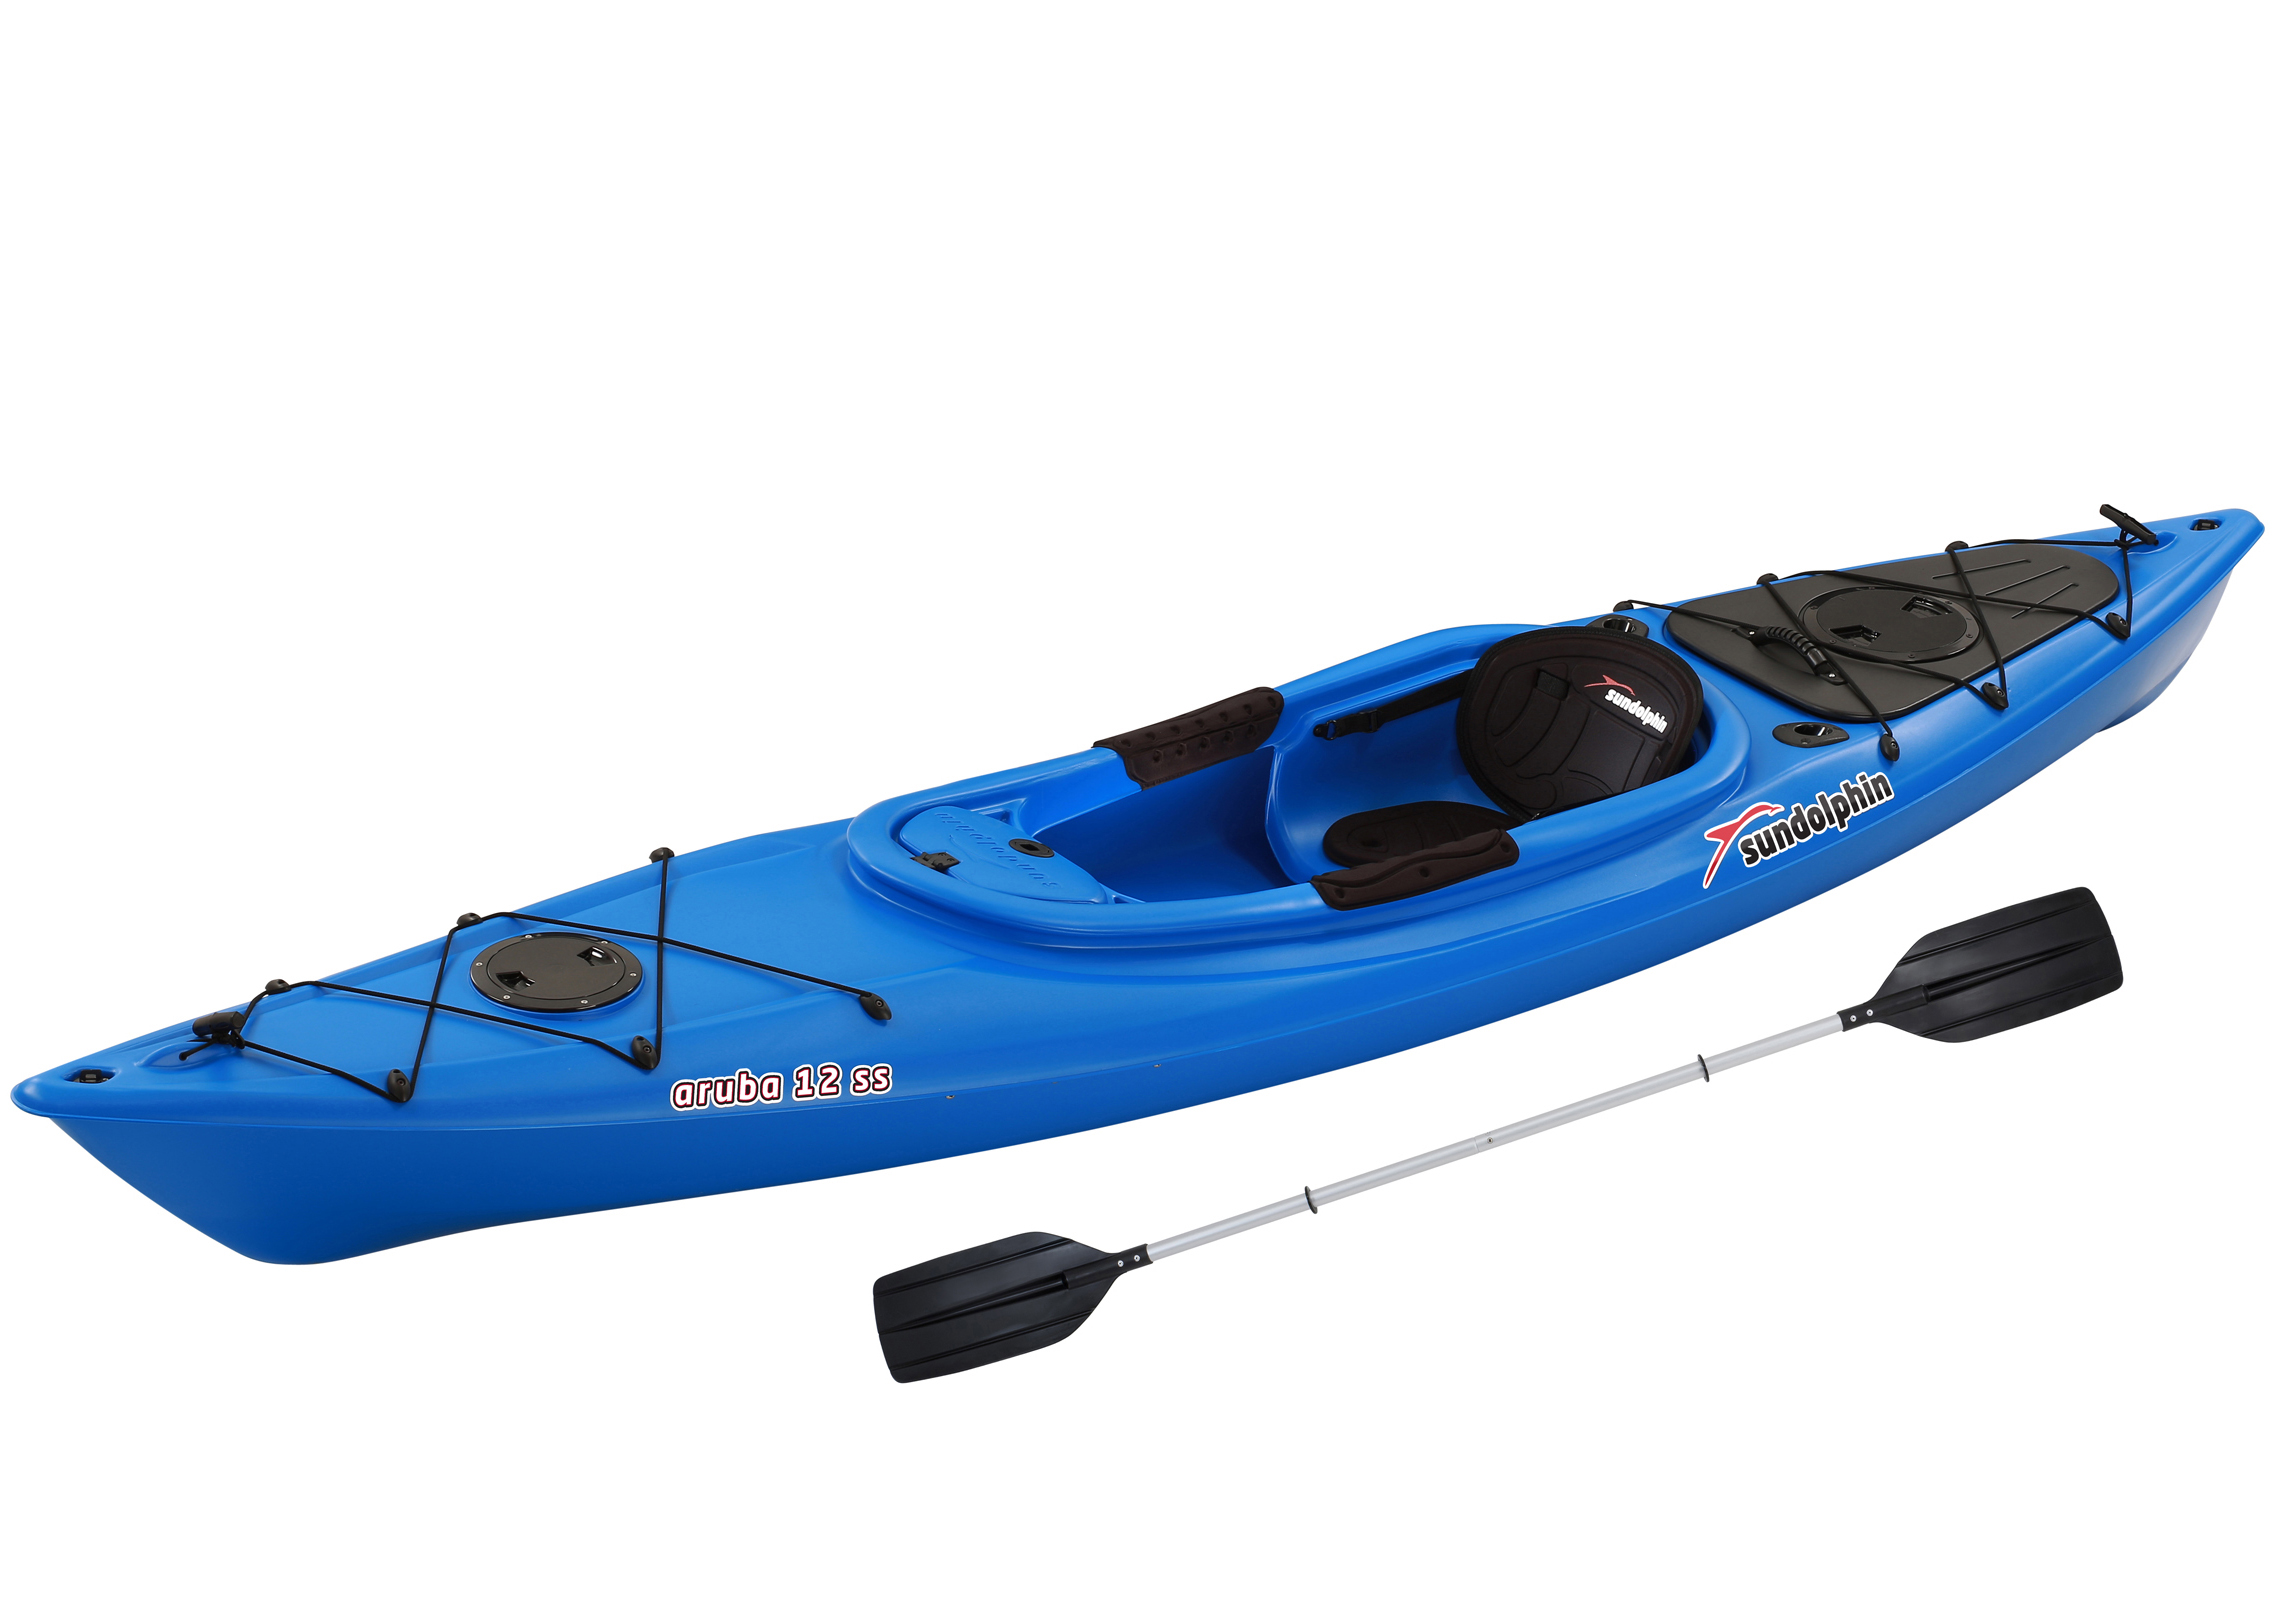 Boats & Water Sports - Walmart.com